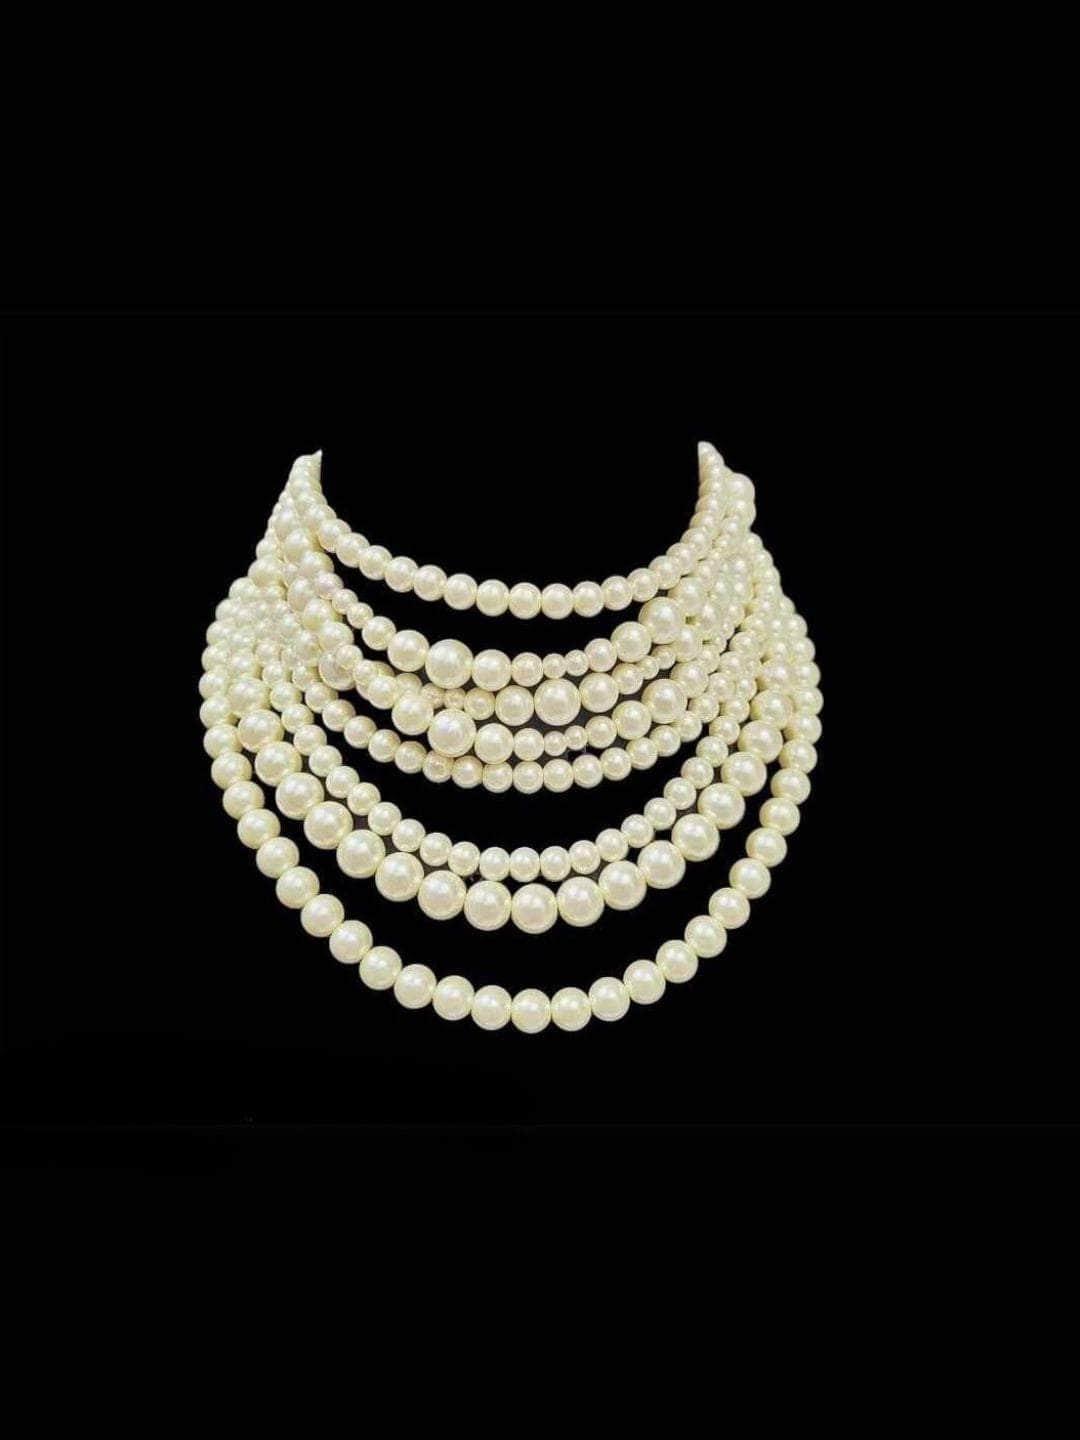 Ishhaara Alia Bhatt Inspired Multilayered Fresh Water Pearl Necklace